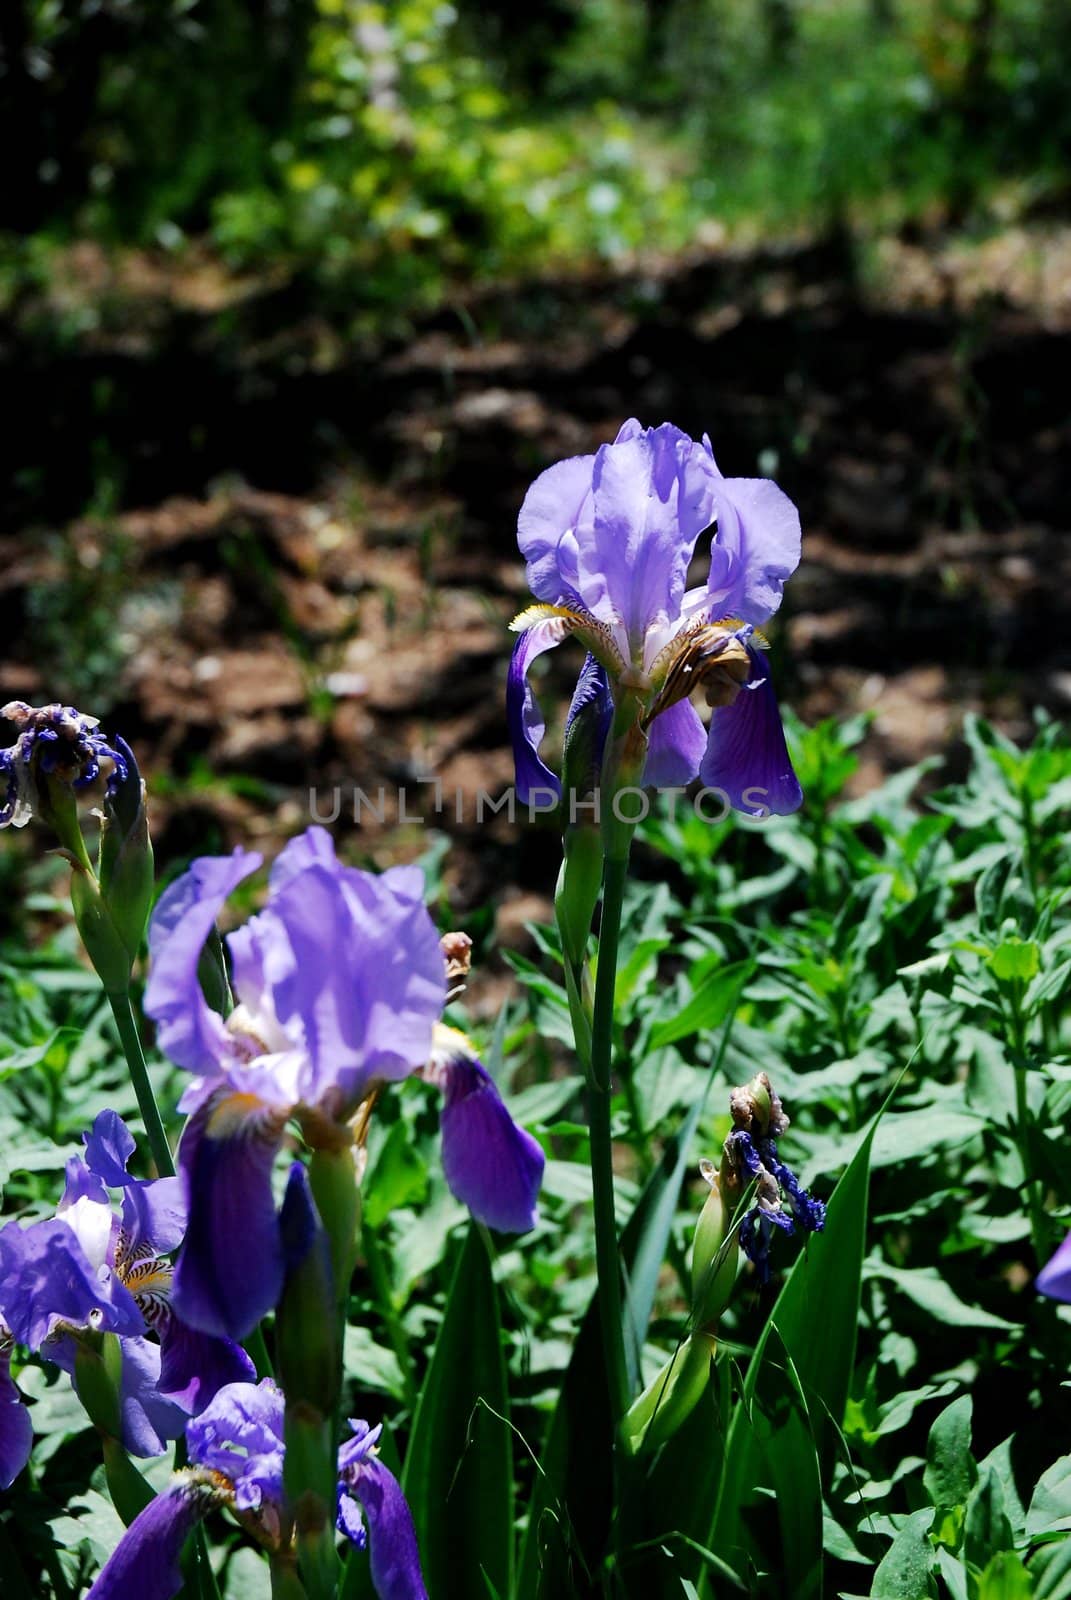 Violet flower - iris by candan